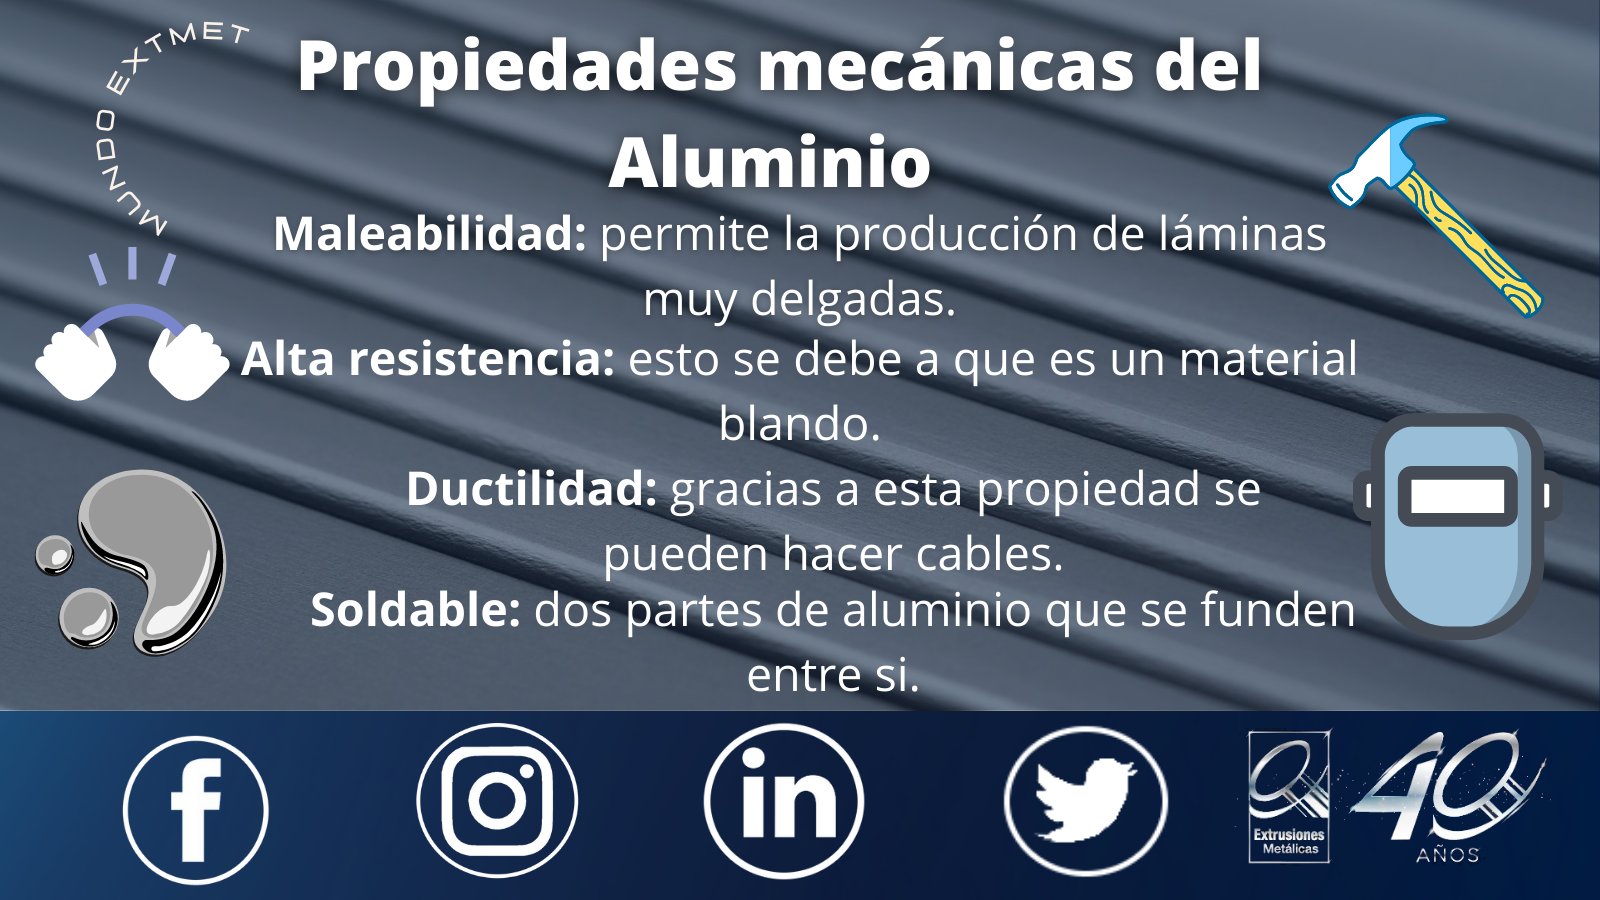 barrera prosa Cumplir Extrusiones Metálicas on Twitter: "Conoce las propiedades mecánicas del  aluminio. #Aluminio #Aluminiero #ExtMet #Propiedades #aluminum  https://t.co/VSHqVsvWFG" / Twitter